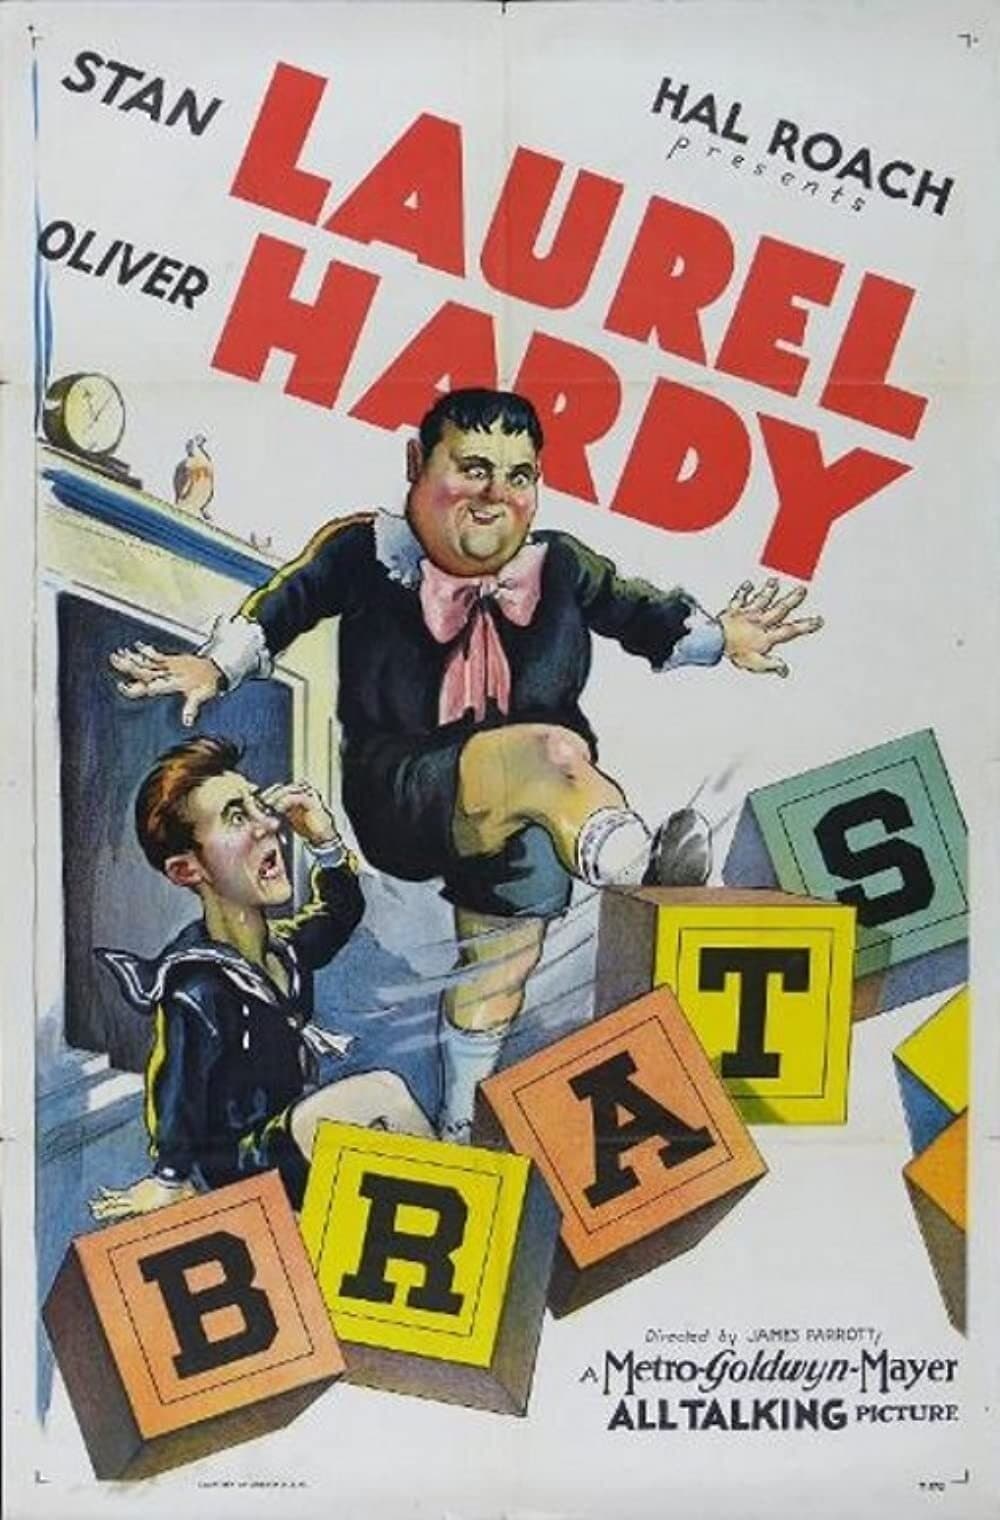 EN - Brats (1930) LAUREL AND HARDY